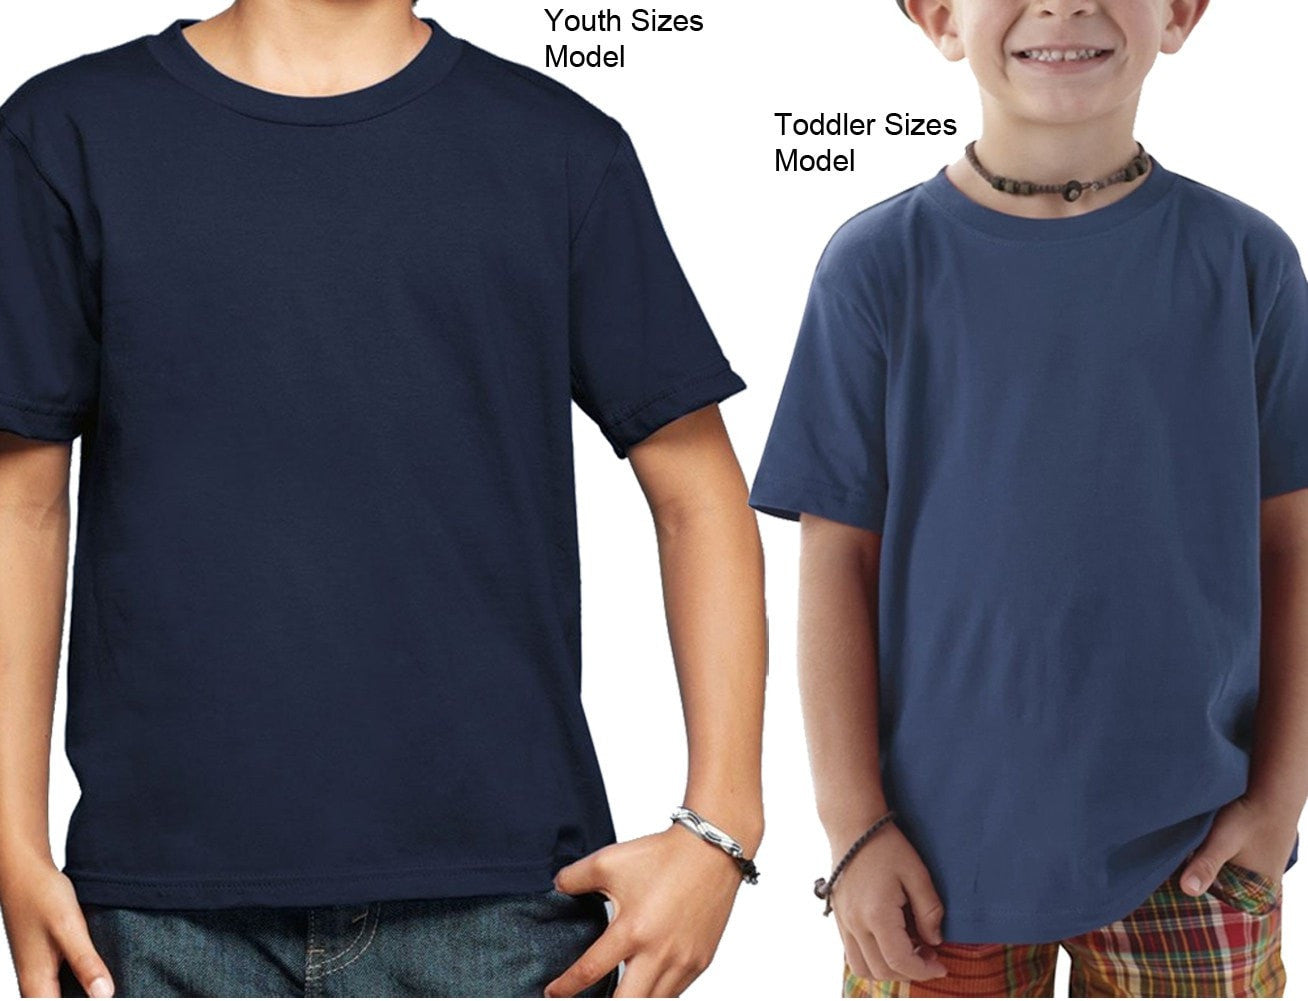 Boy's Portland 503 Area Code T-Shirt